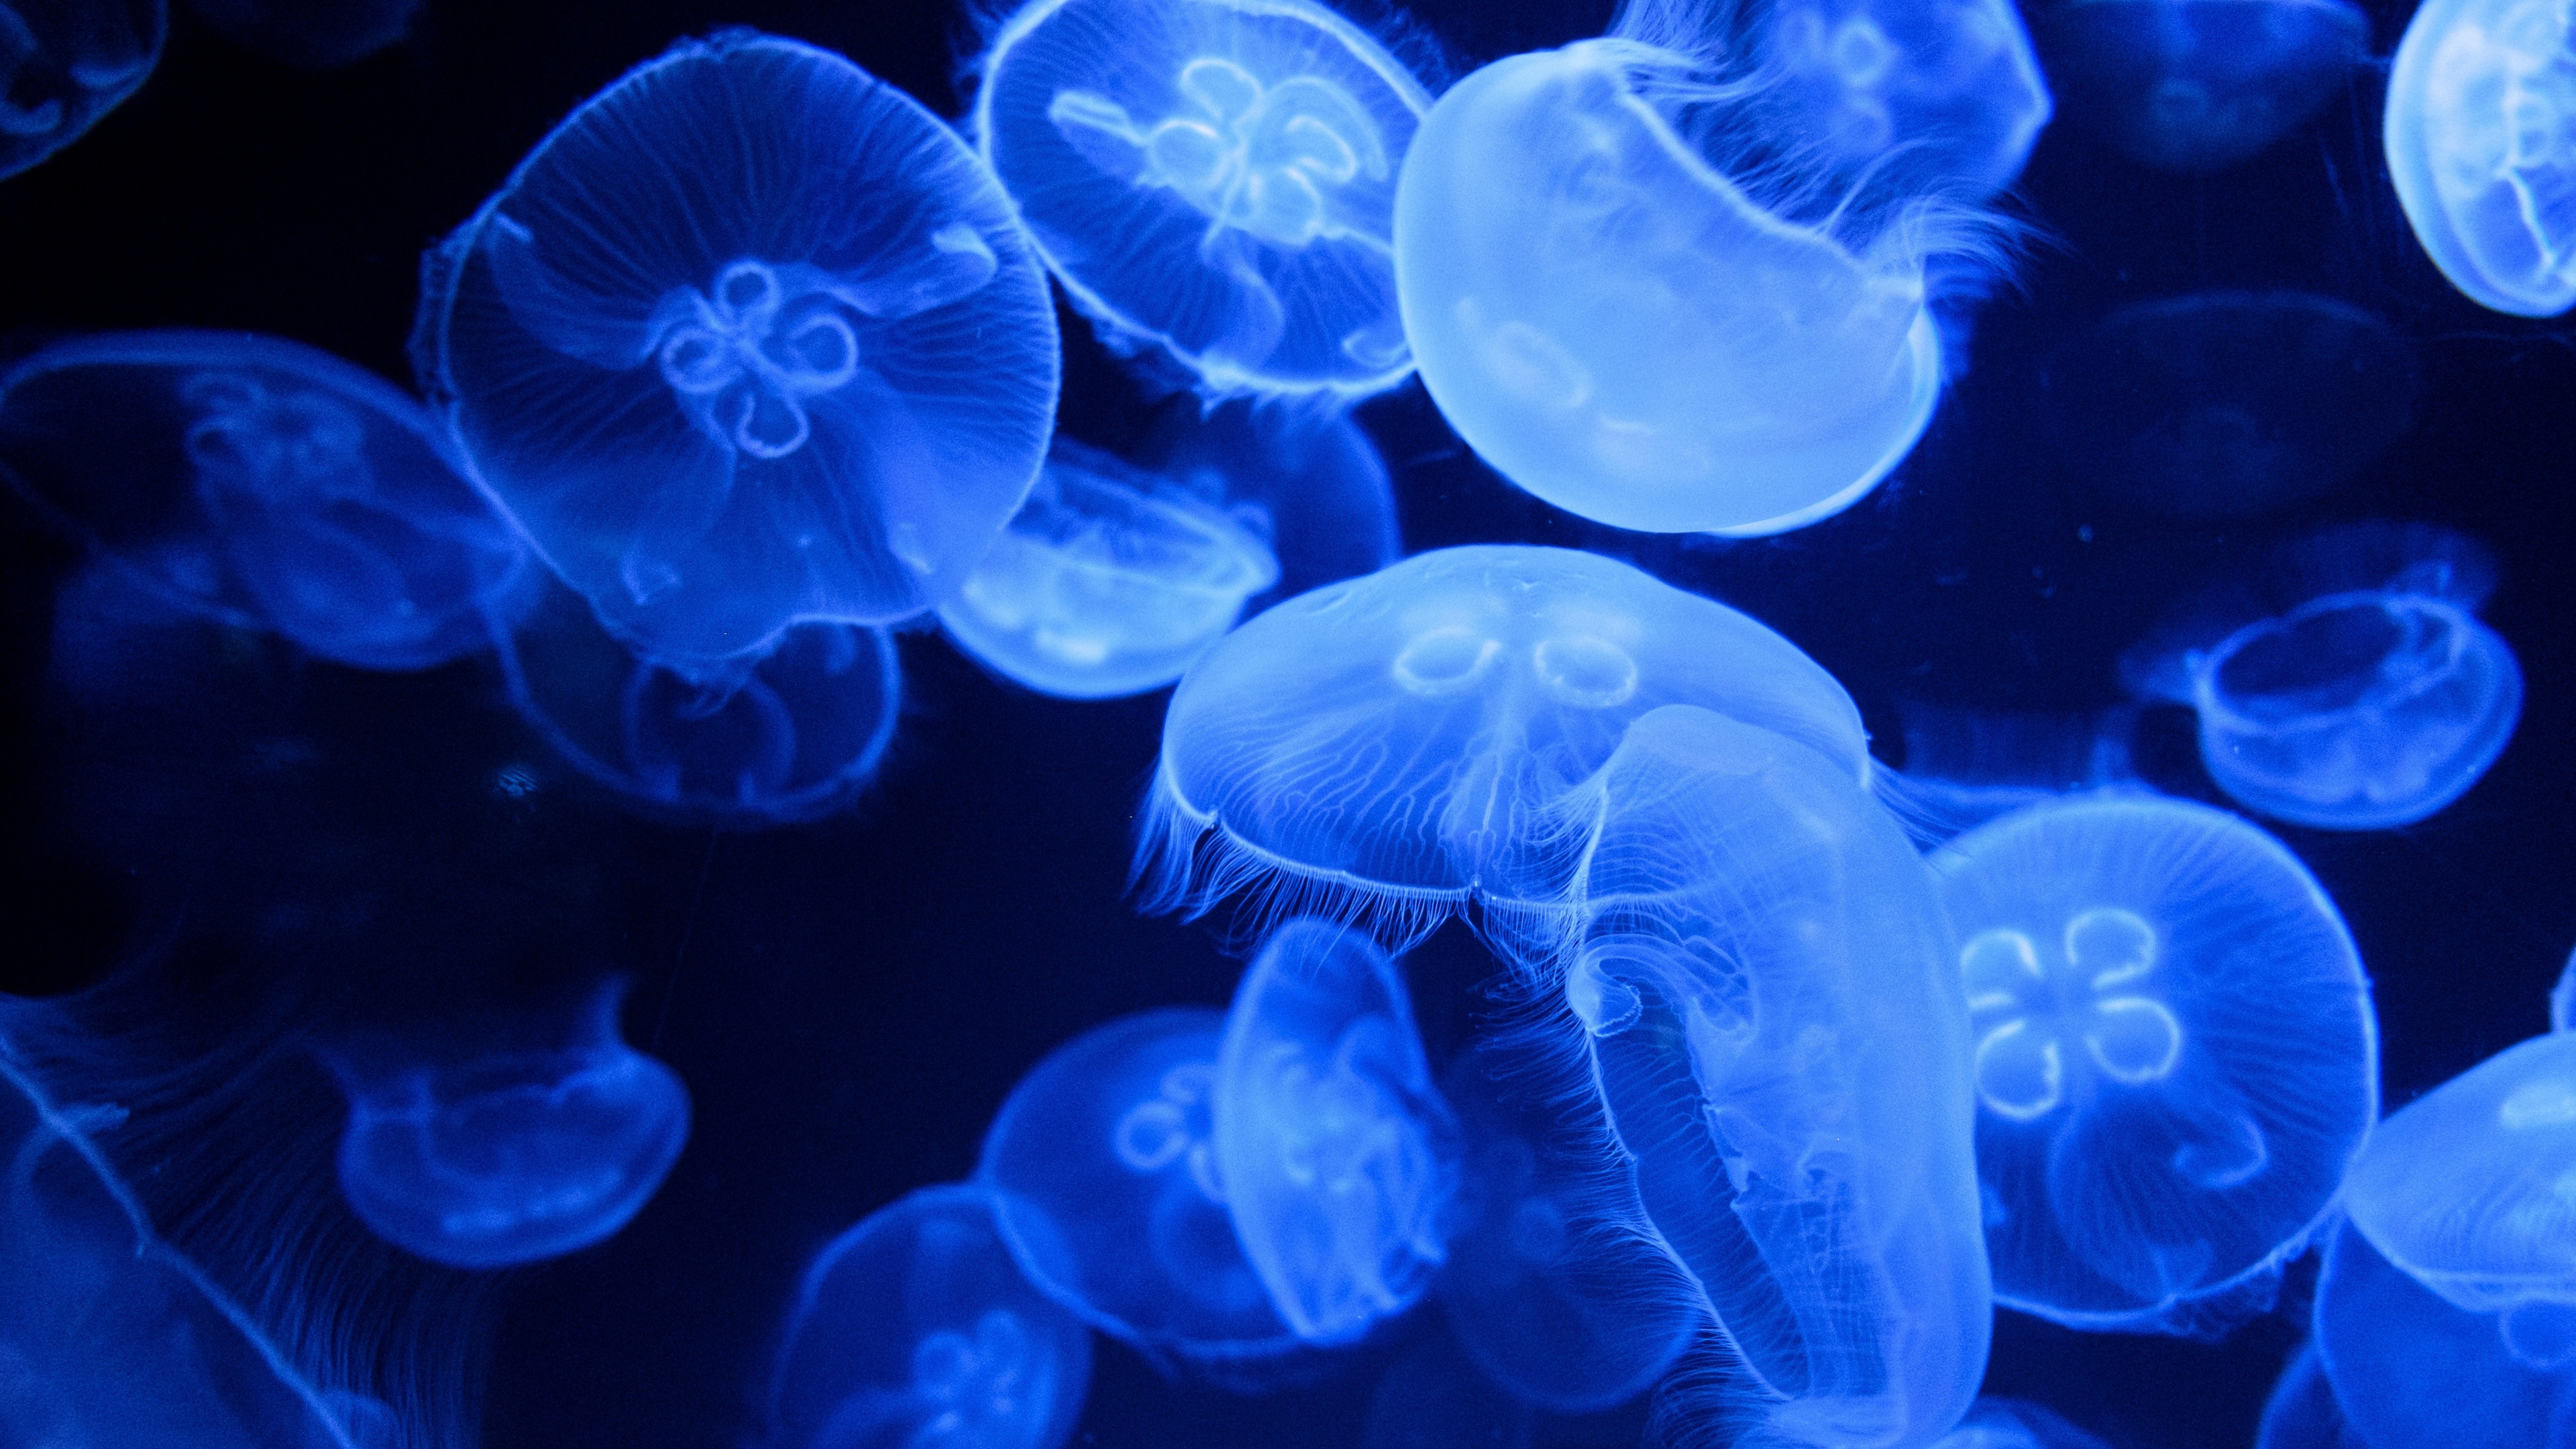 Blue Jellyfish 4K Wallpaper, Aquarium, Underwater, Glowing, Marine life, Transparent, Dark